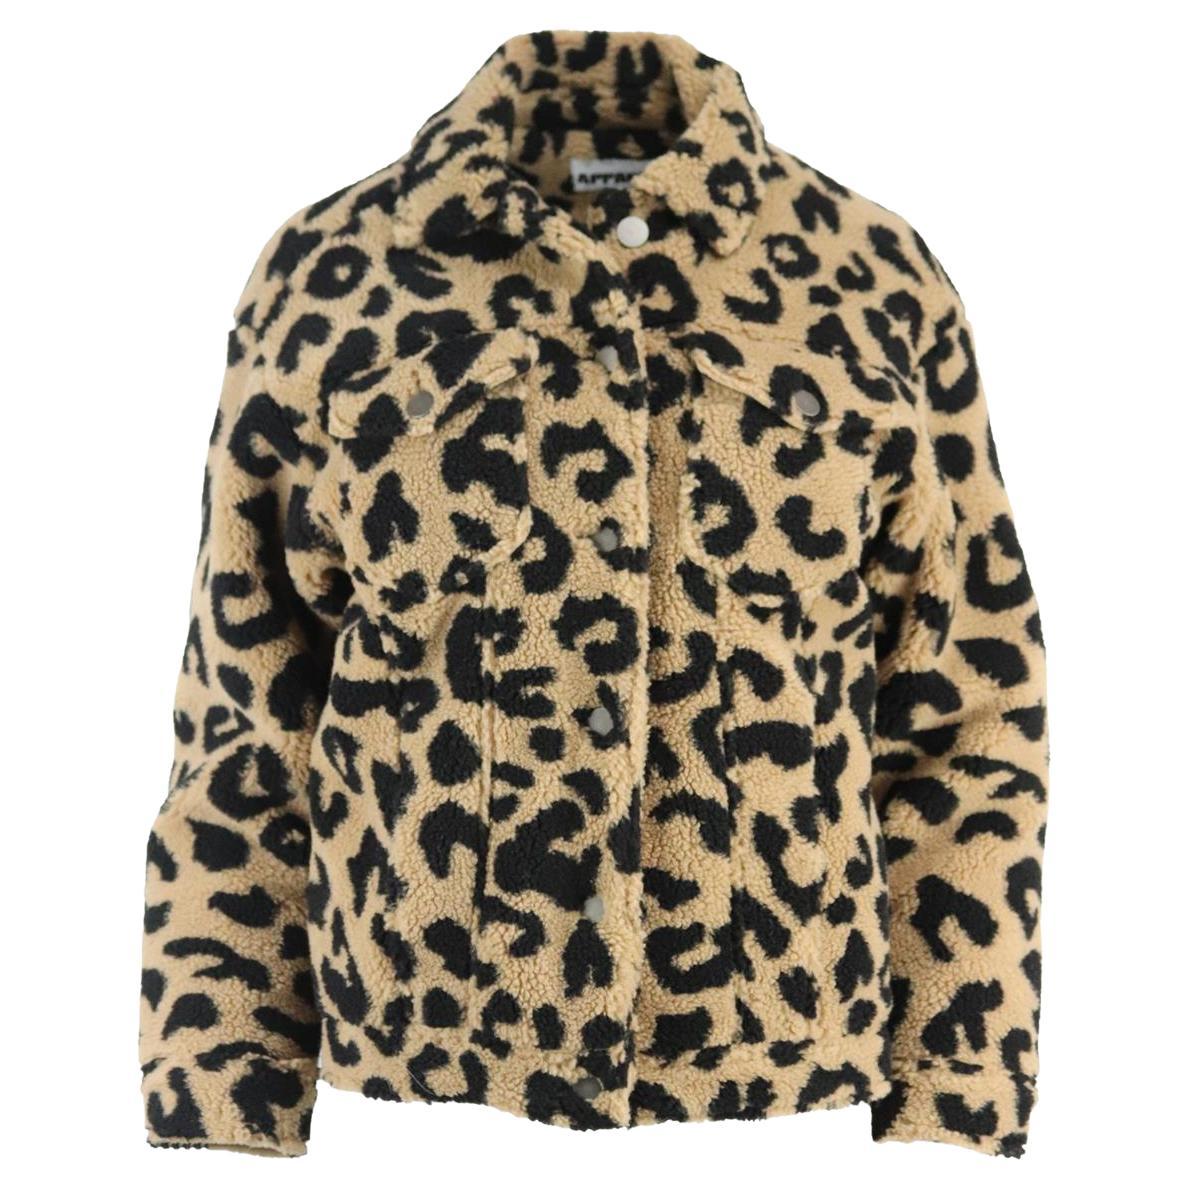 Apparis Leopard Print Faux Shearling Jacket Small